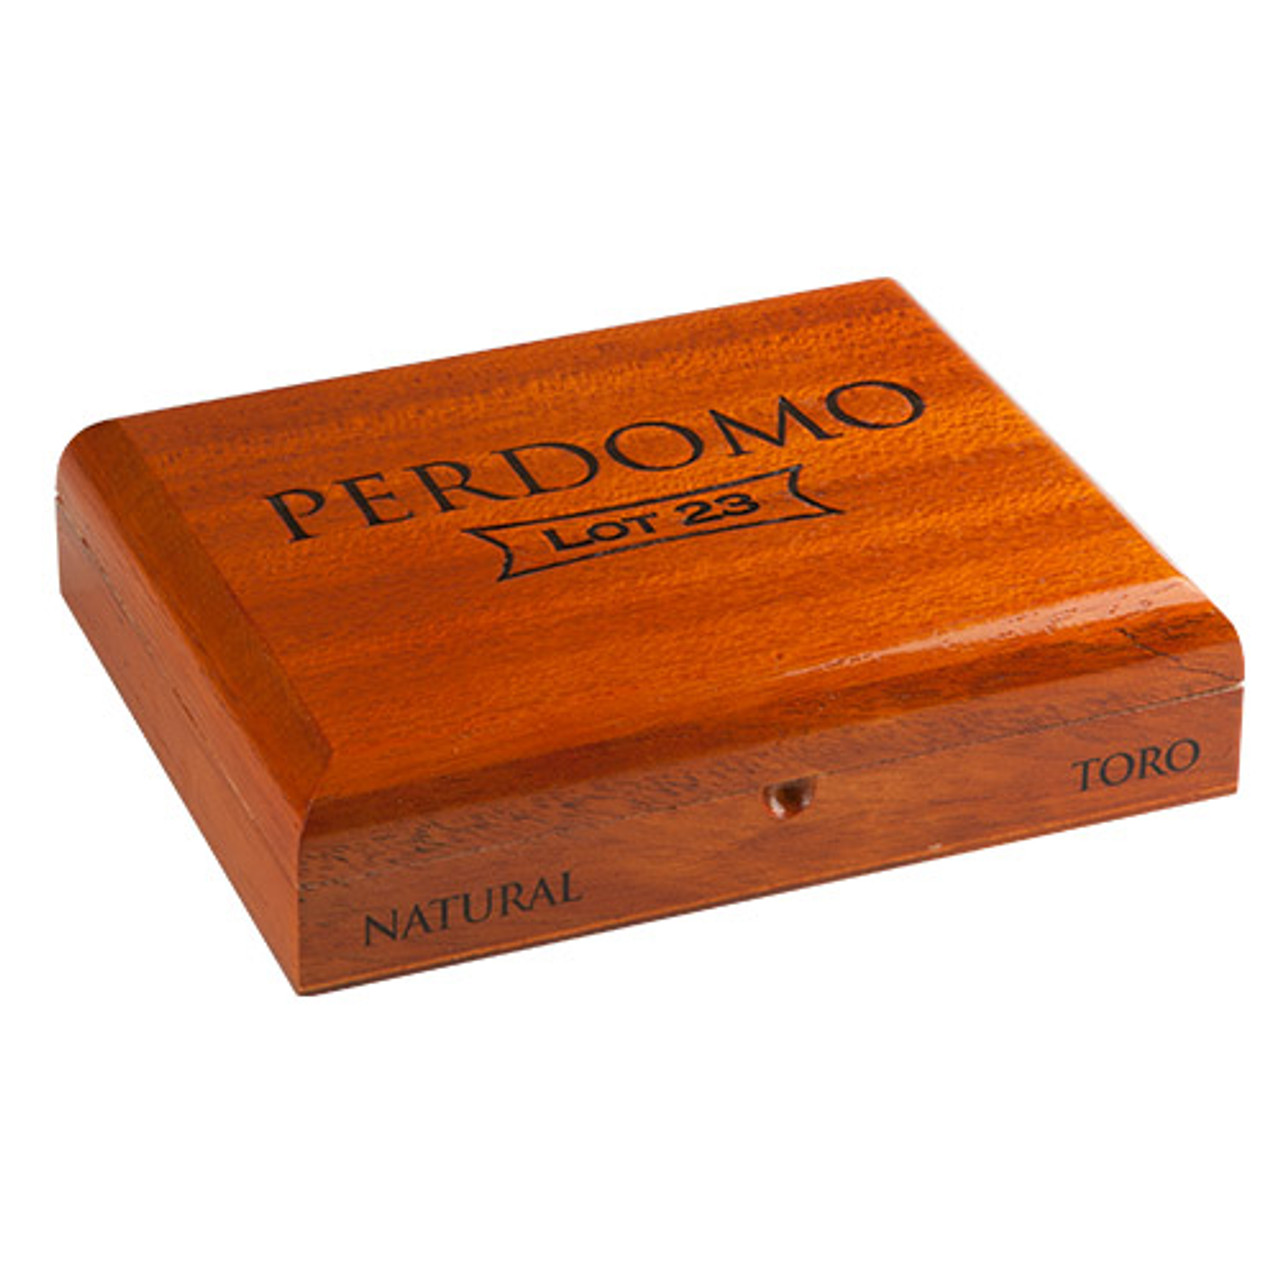 Perdomo Lot 23 Gordito Cigars - 4.5 x 60 (Box of 24)